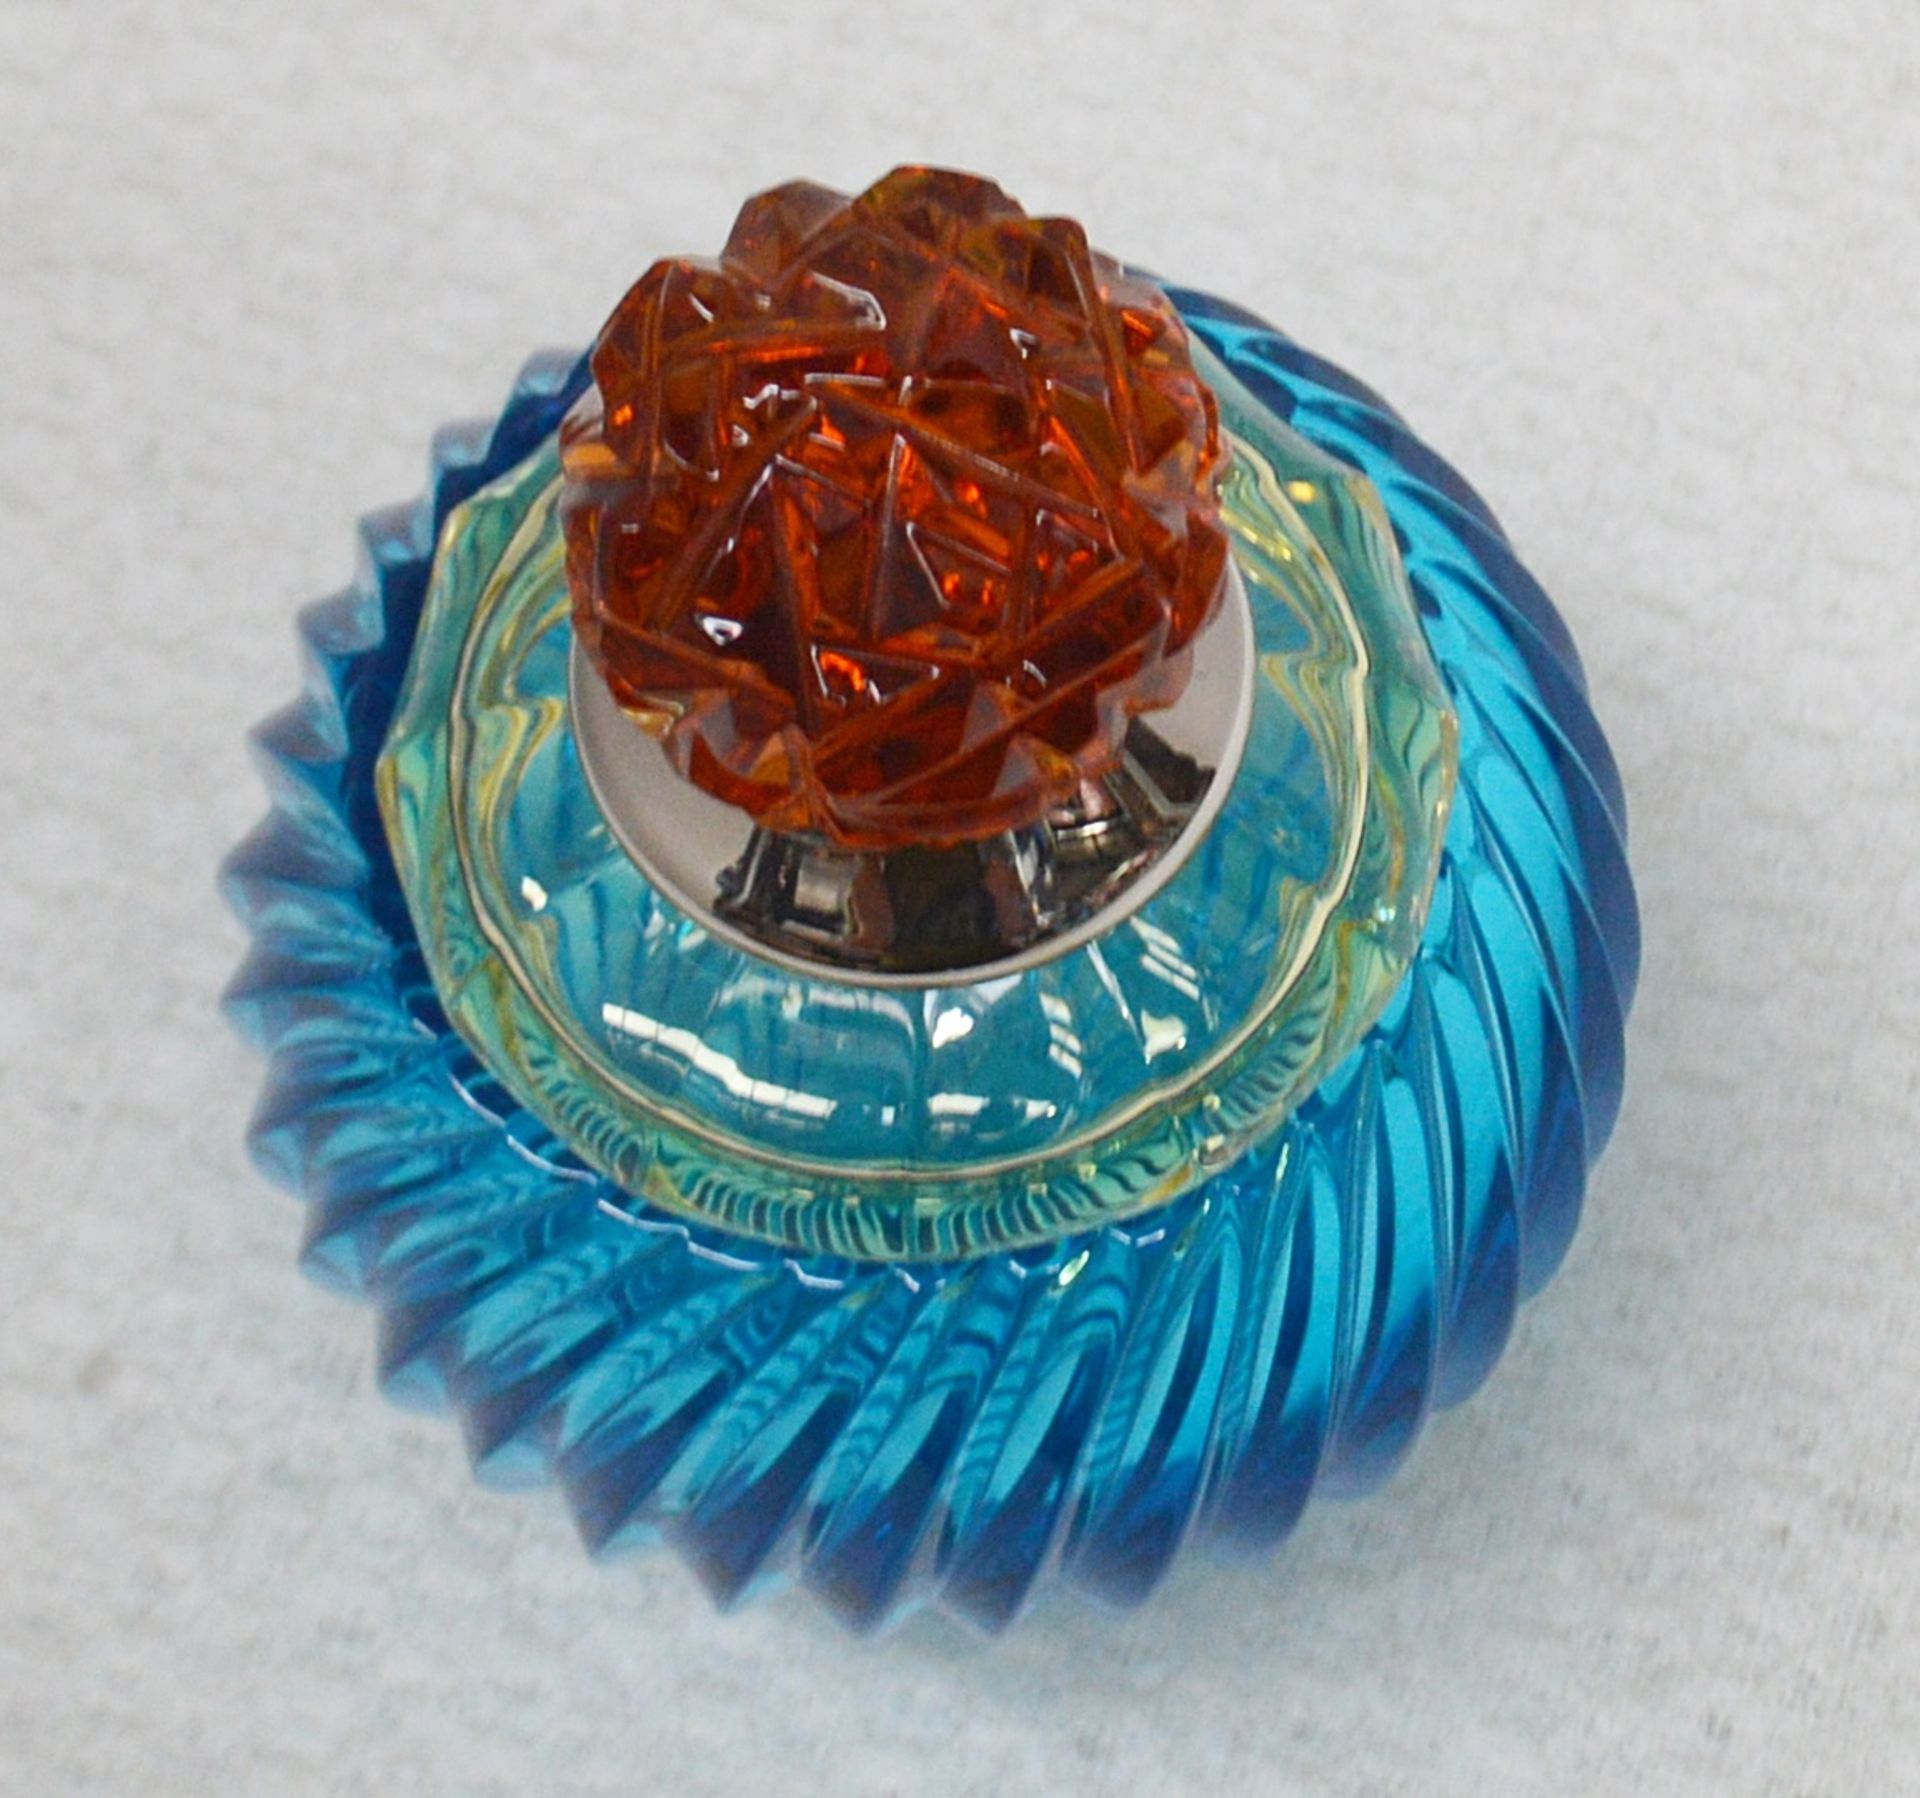 1 x BALDI 'Home Jewels' Italian Hand-crafted Artisan Small Coccinella Jar **Original RRP £2.665.00** - Image 2 of 3